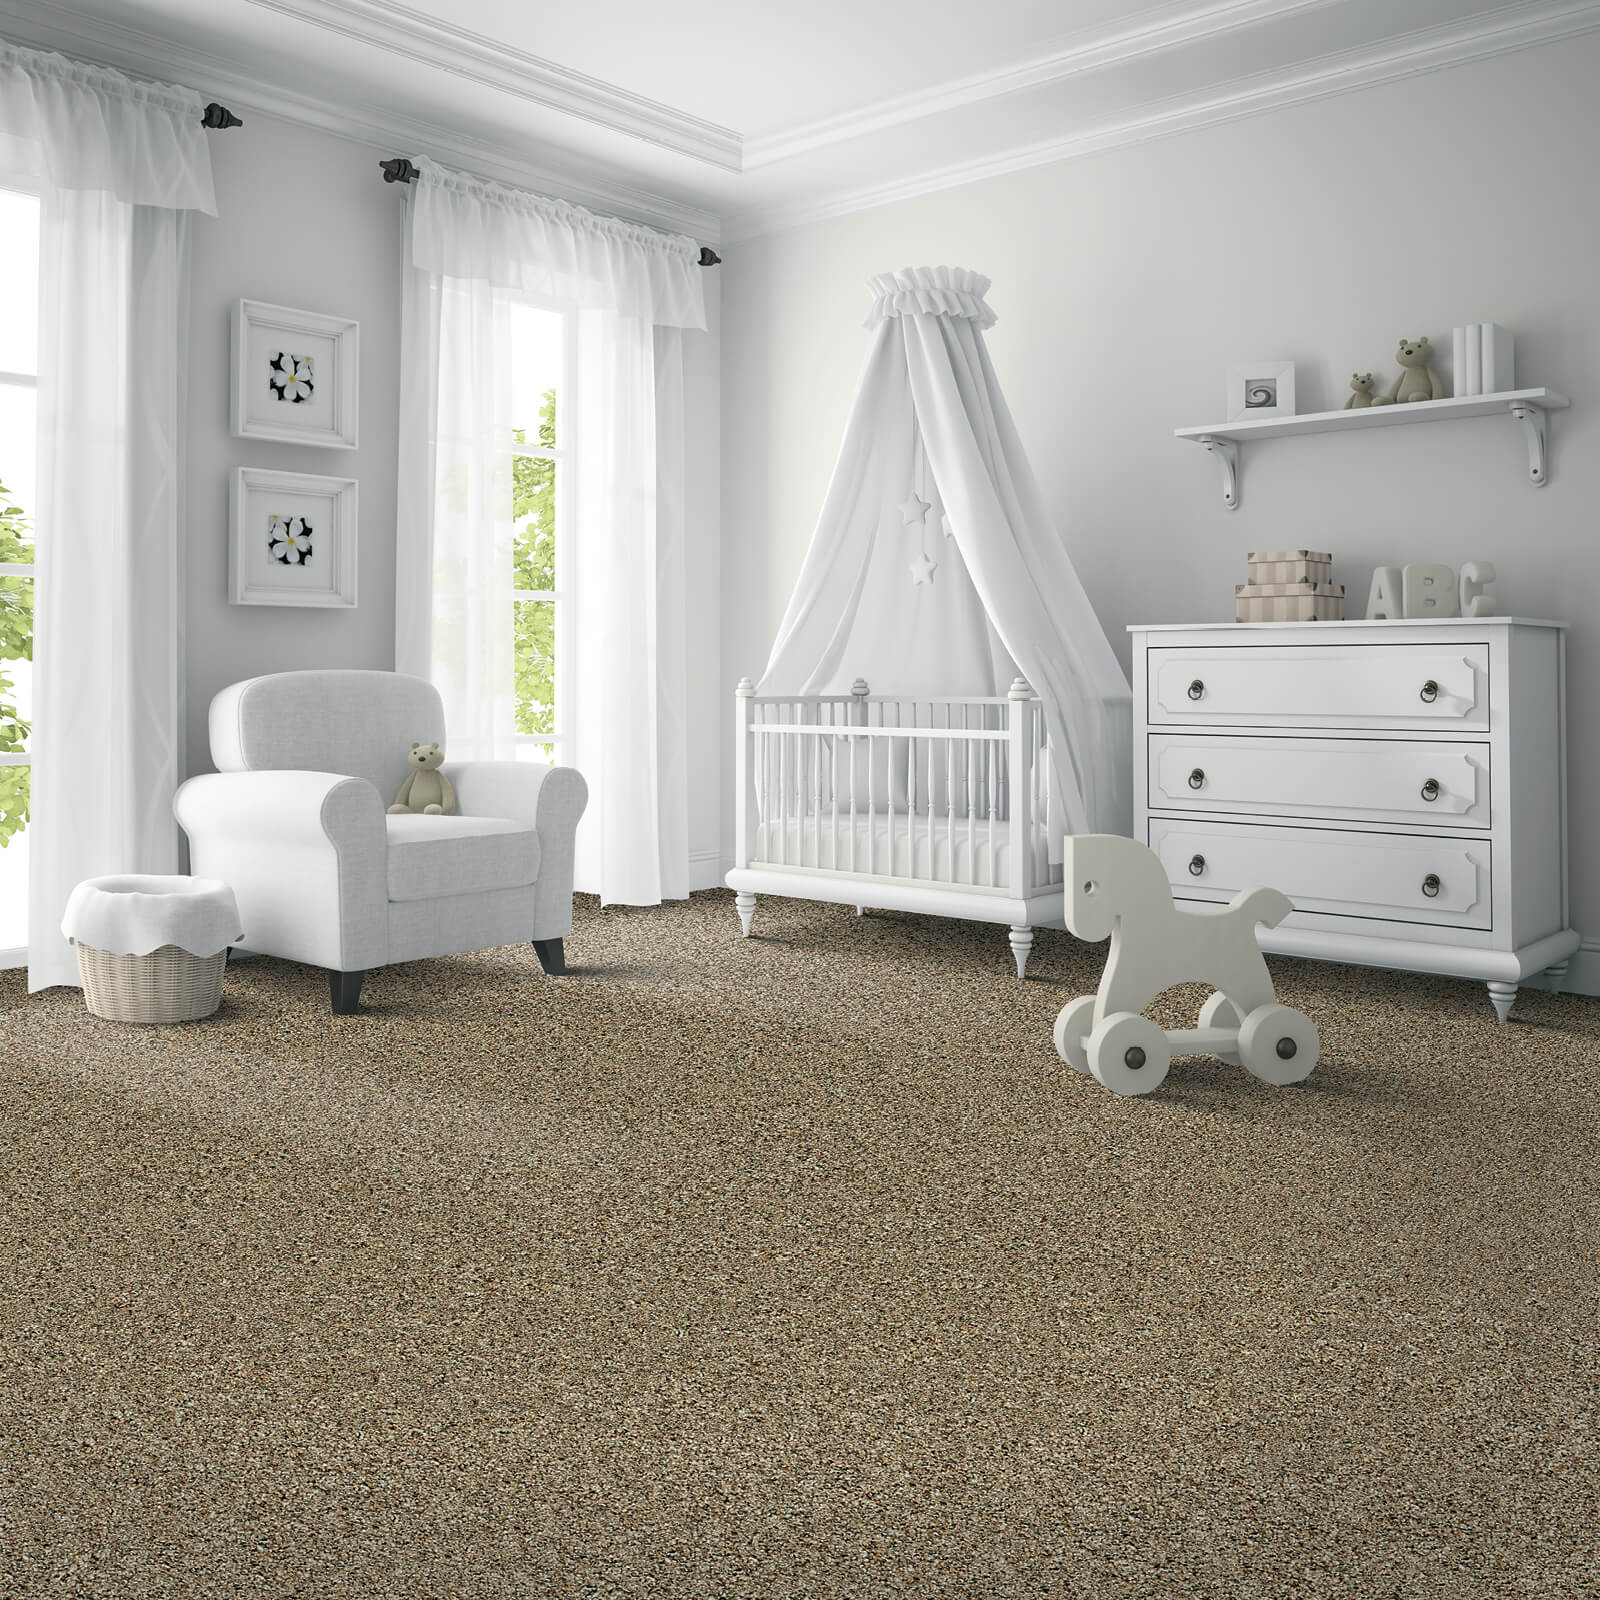 Carpeting in Nursery | Haley's Flooring & Interiors